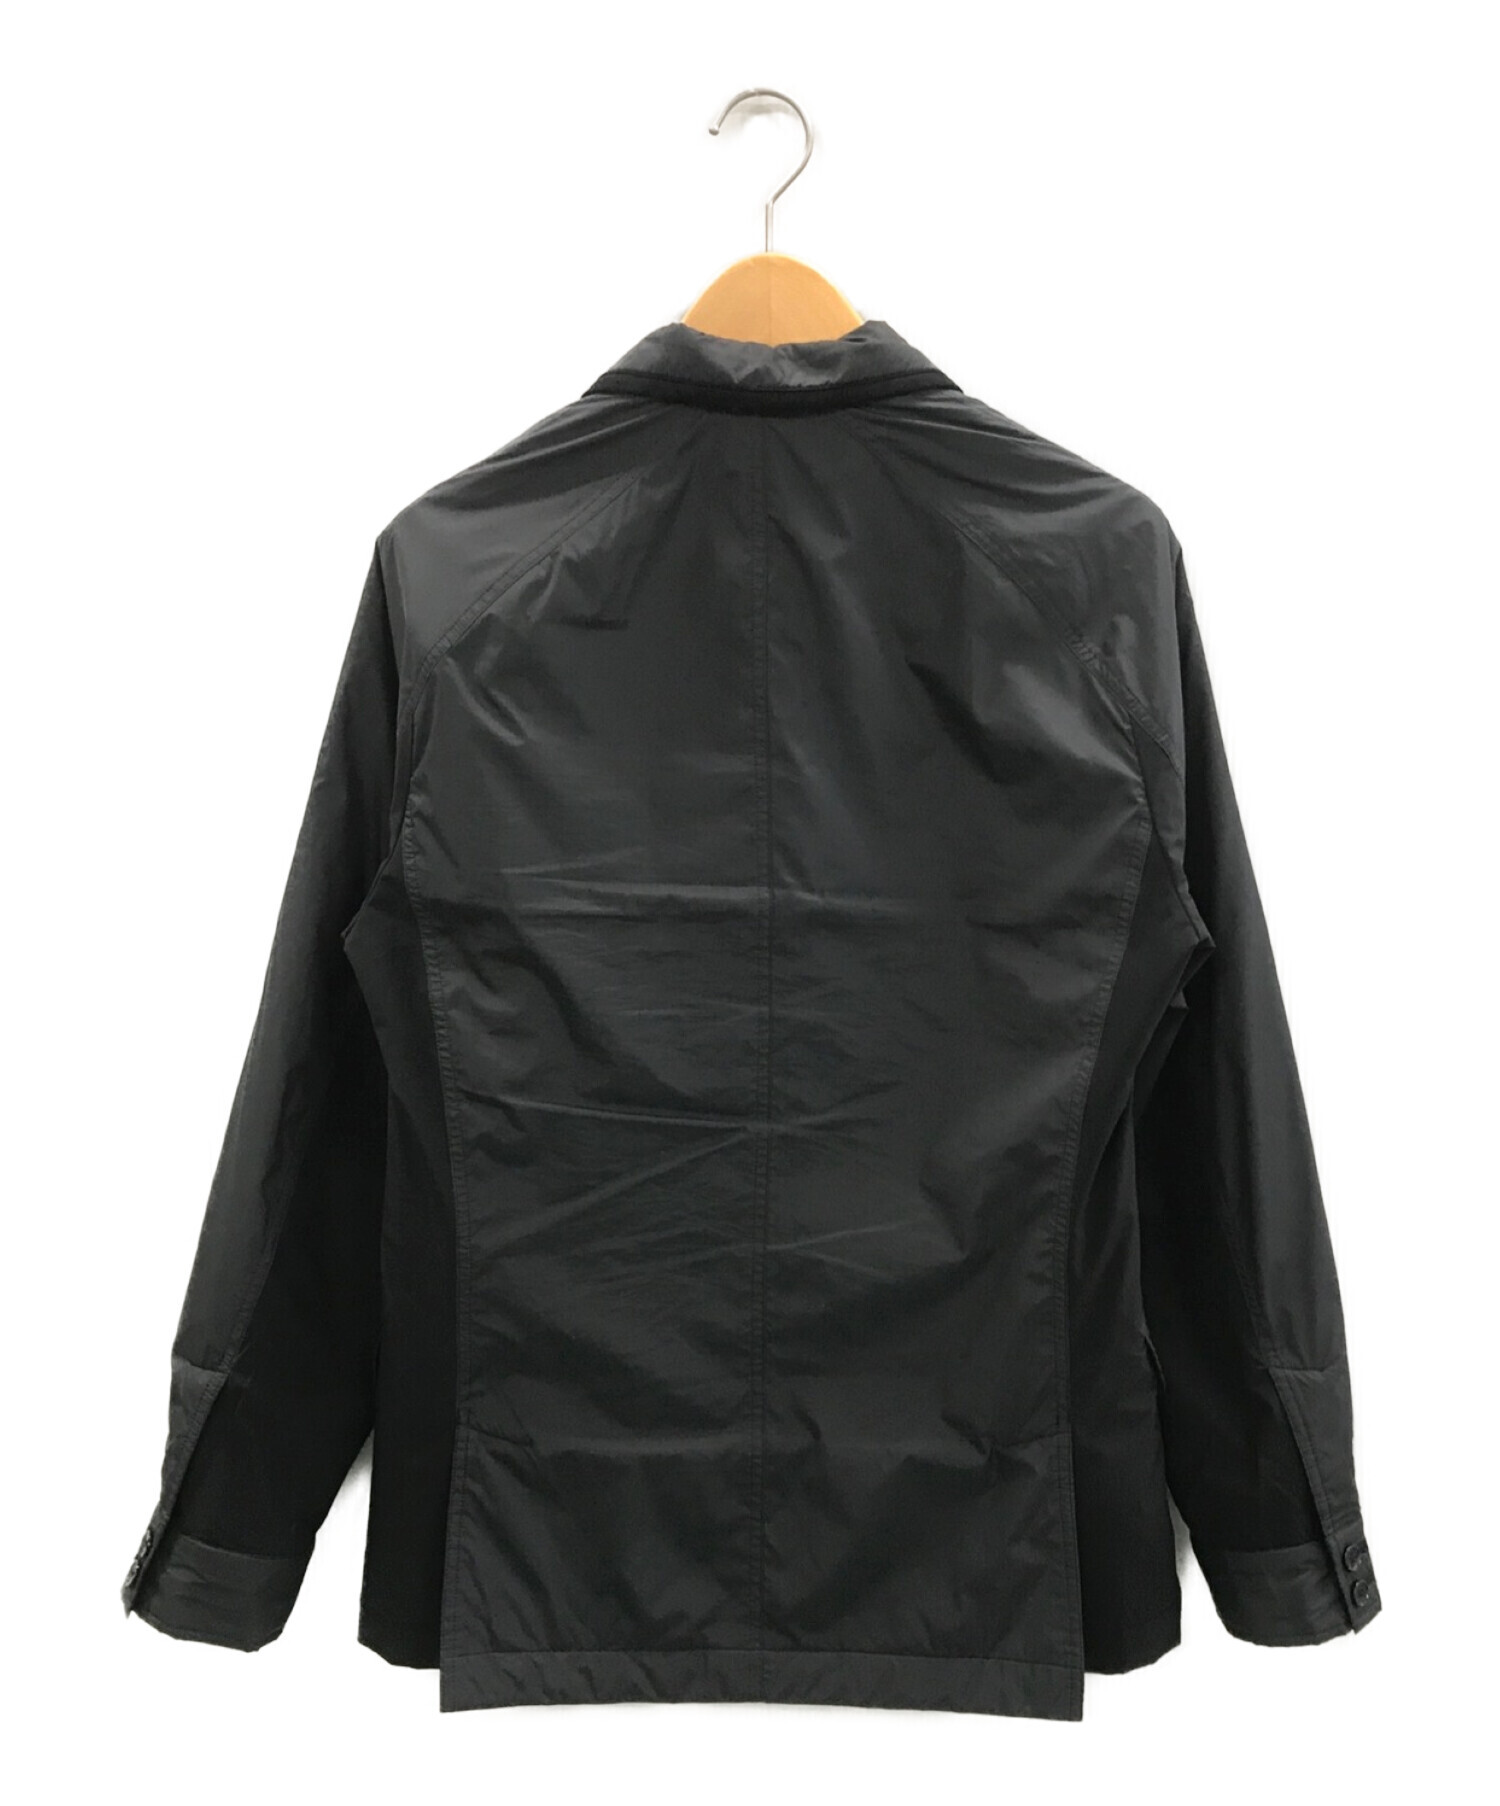 CITERA (シテラ) AUTOBAHN INSULATE 中綿ジャケット ブラック サイズ:M